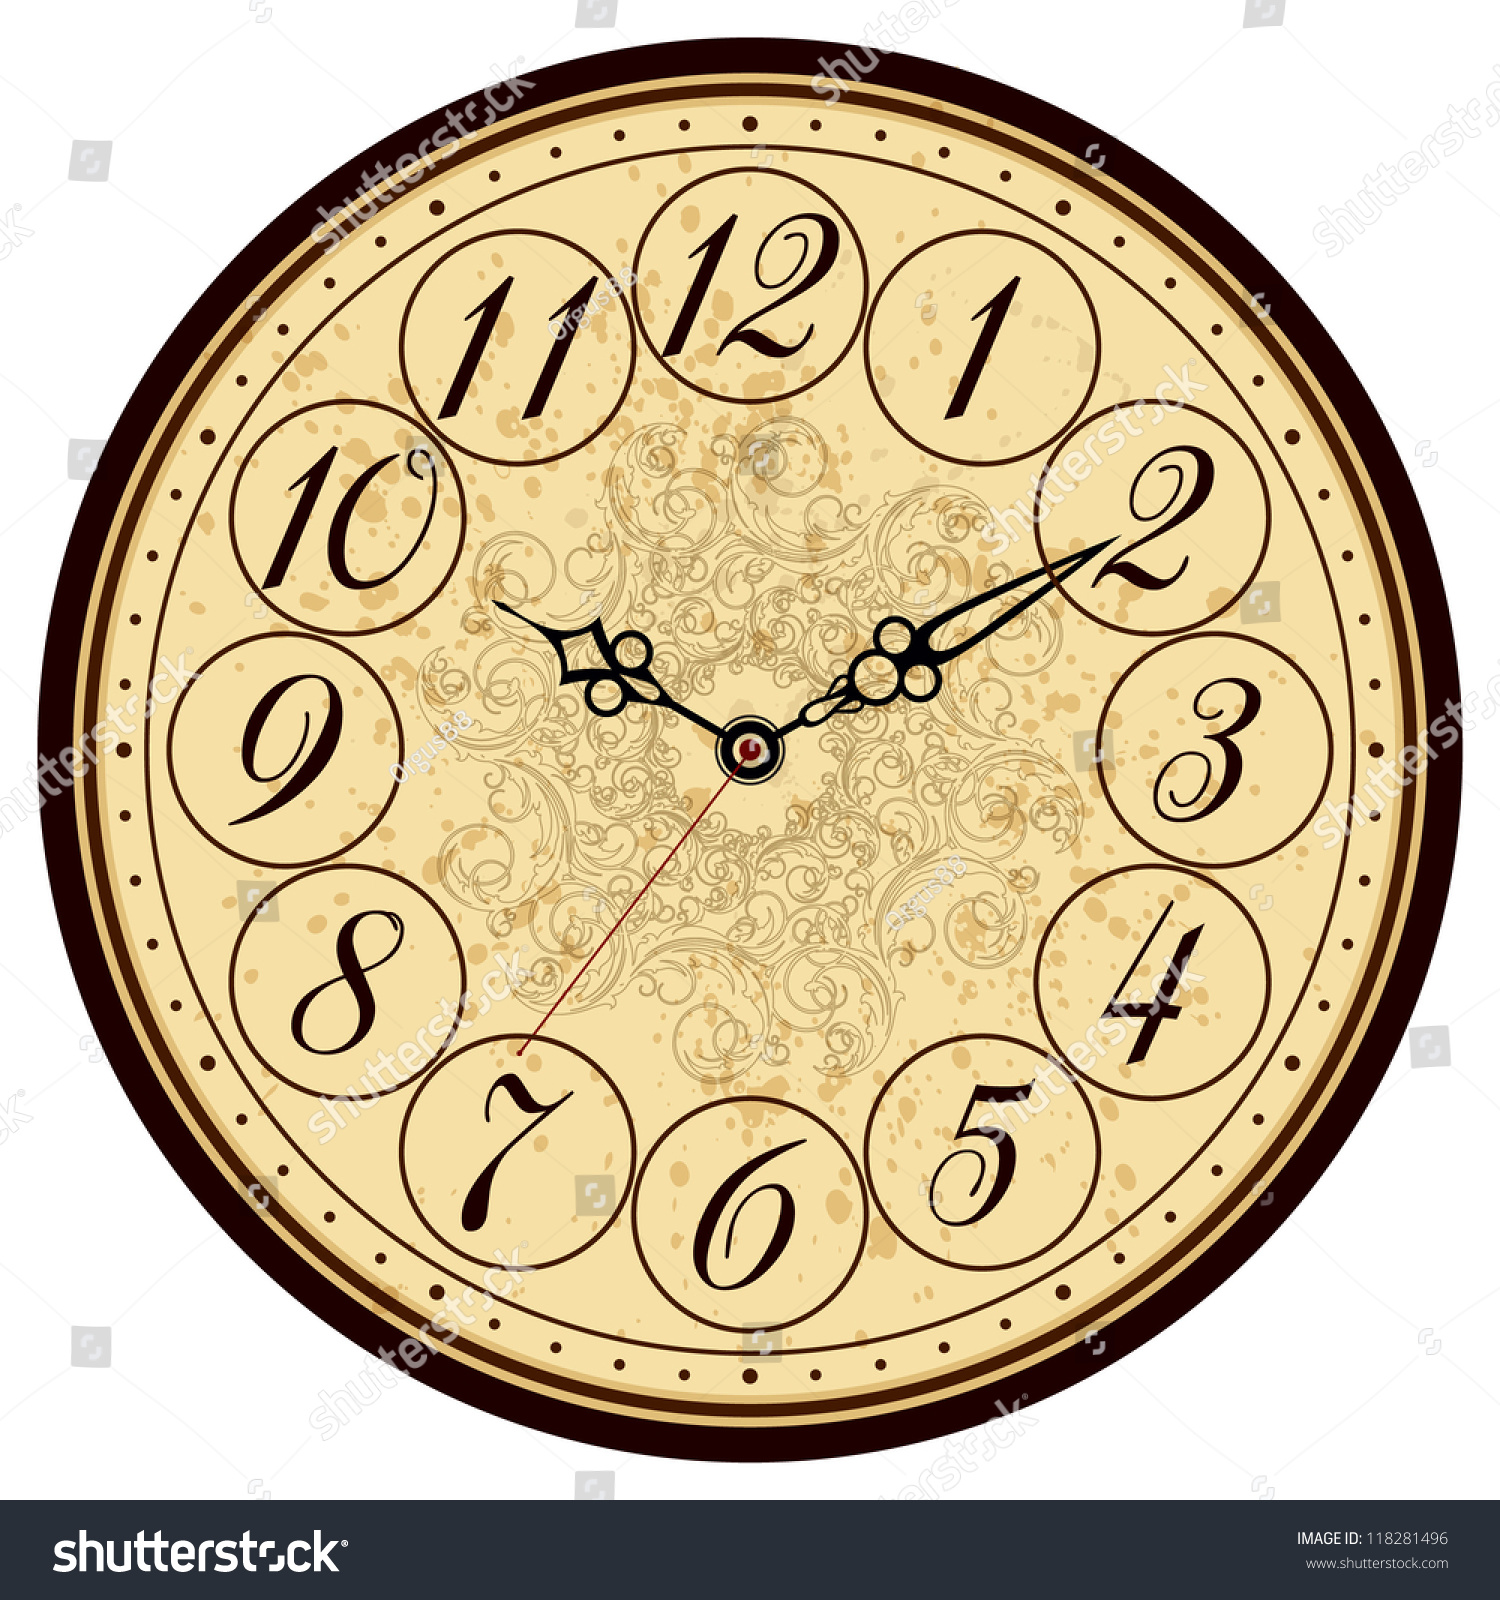 Vector Old Vintage Clock Face Stock Vector 118281496 - Shutterstock